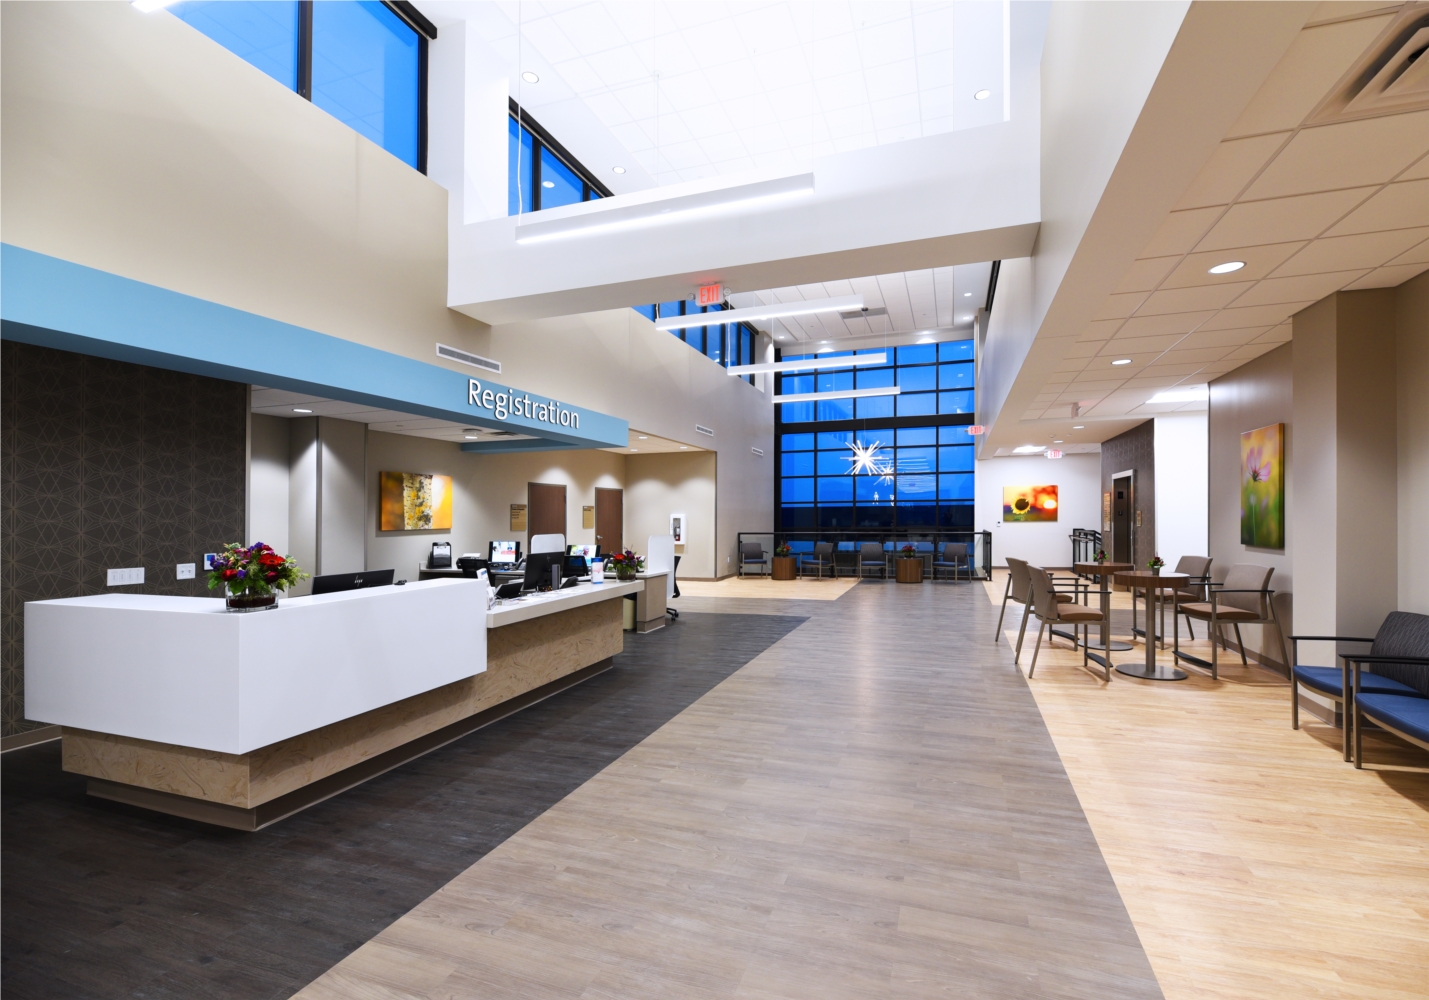 New medial office building for Premier Health in Beavercreek, OH designed by Elevar.